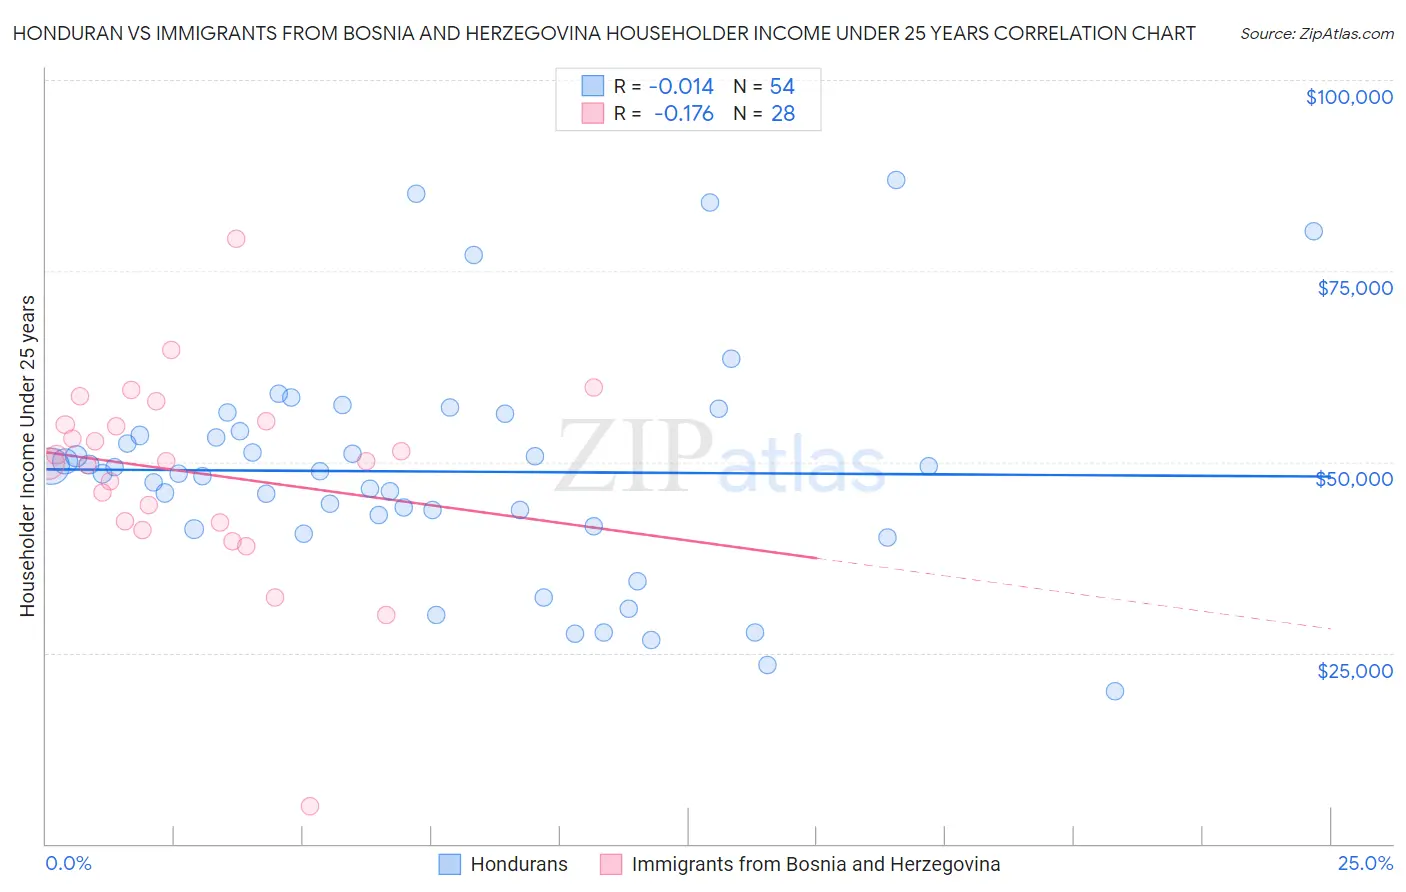 Honduran vs Immigrants from Bosnia and Herzegovina Householder Income Under 25 years